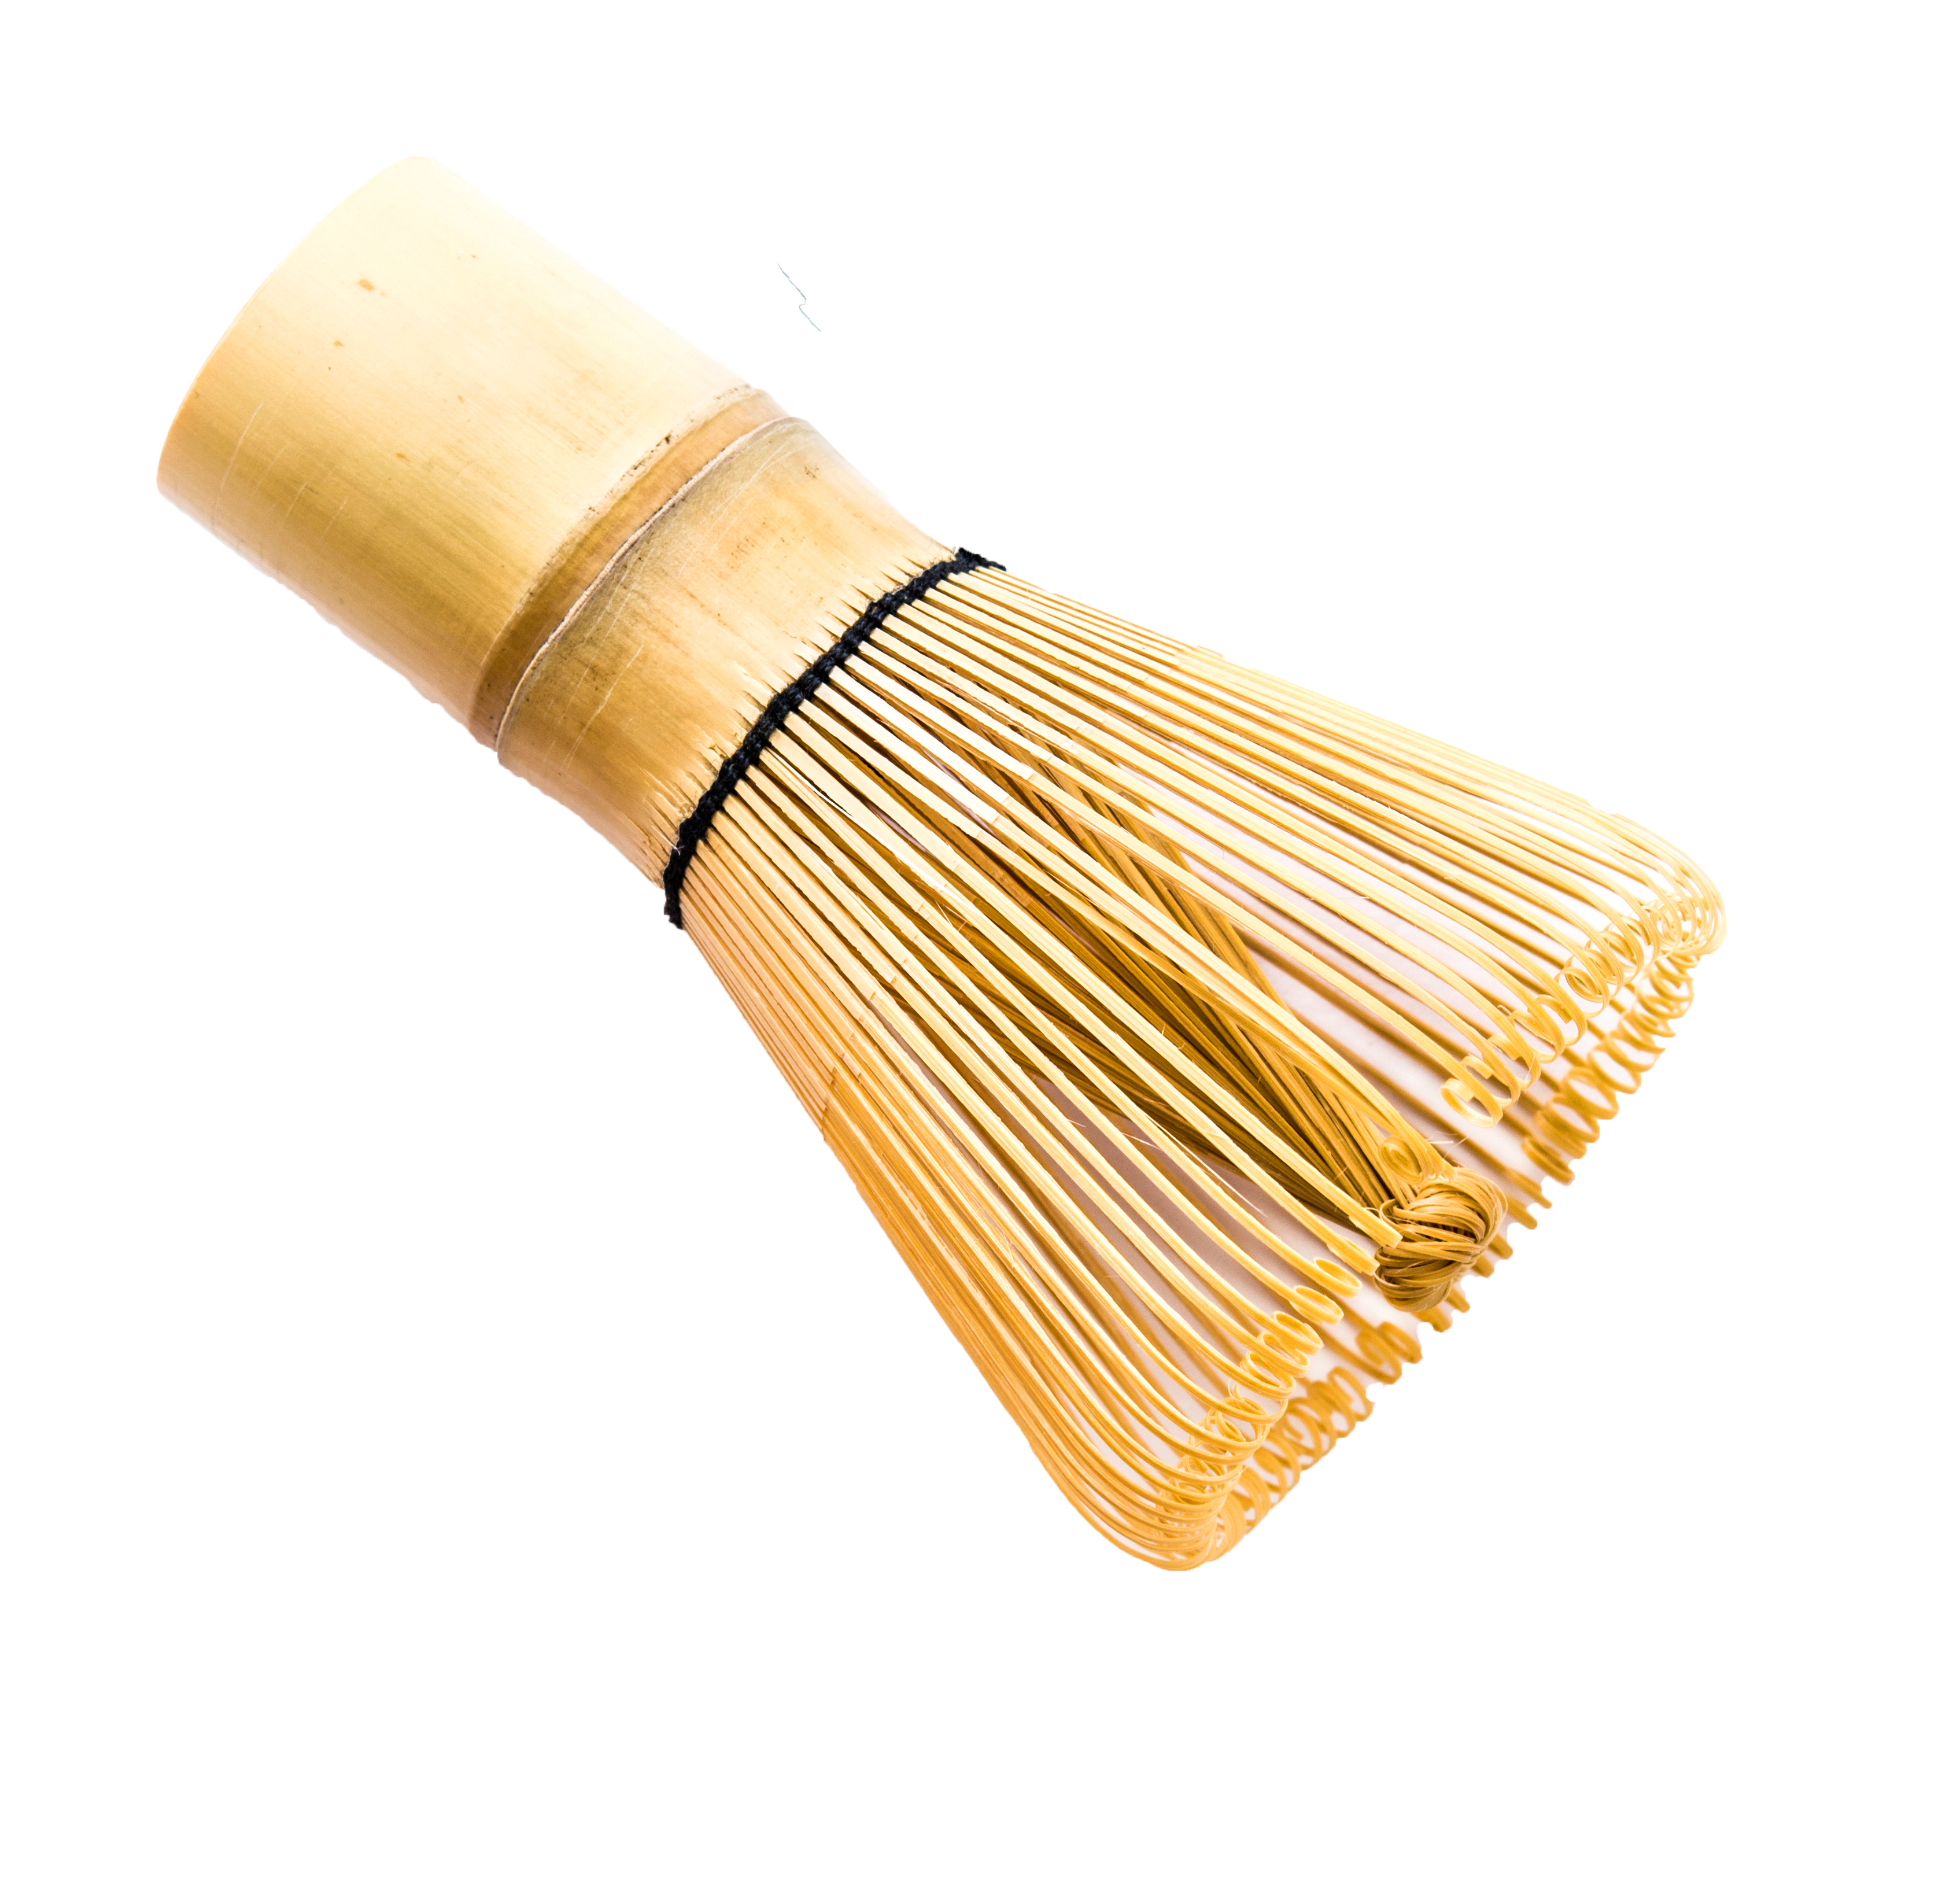 Batidor MatchaDNA. Batidor de bambú para preparar matcha, hecho a mano